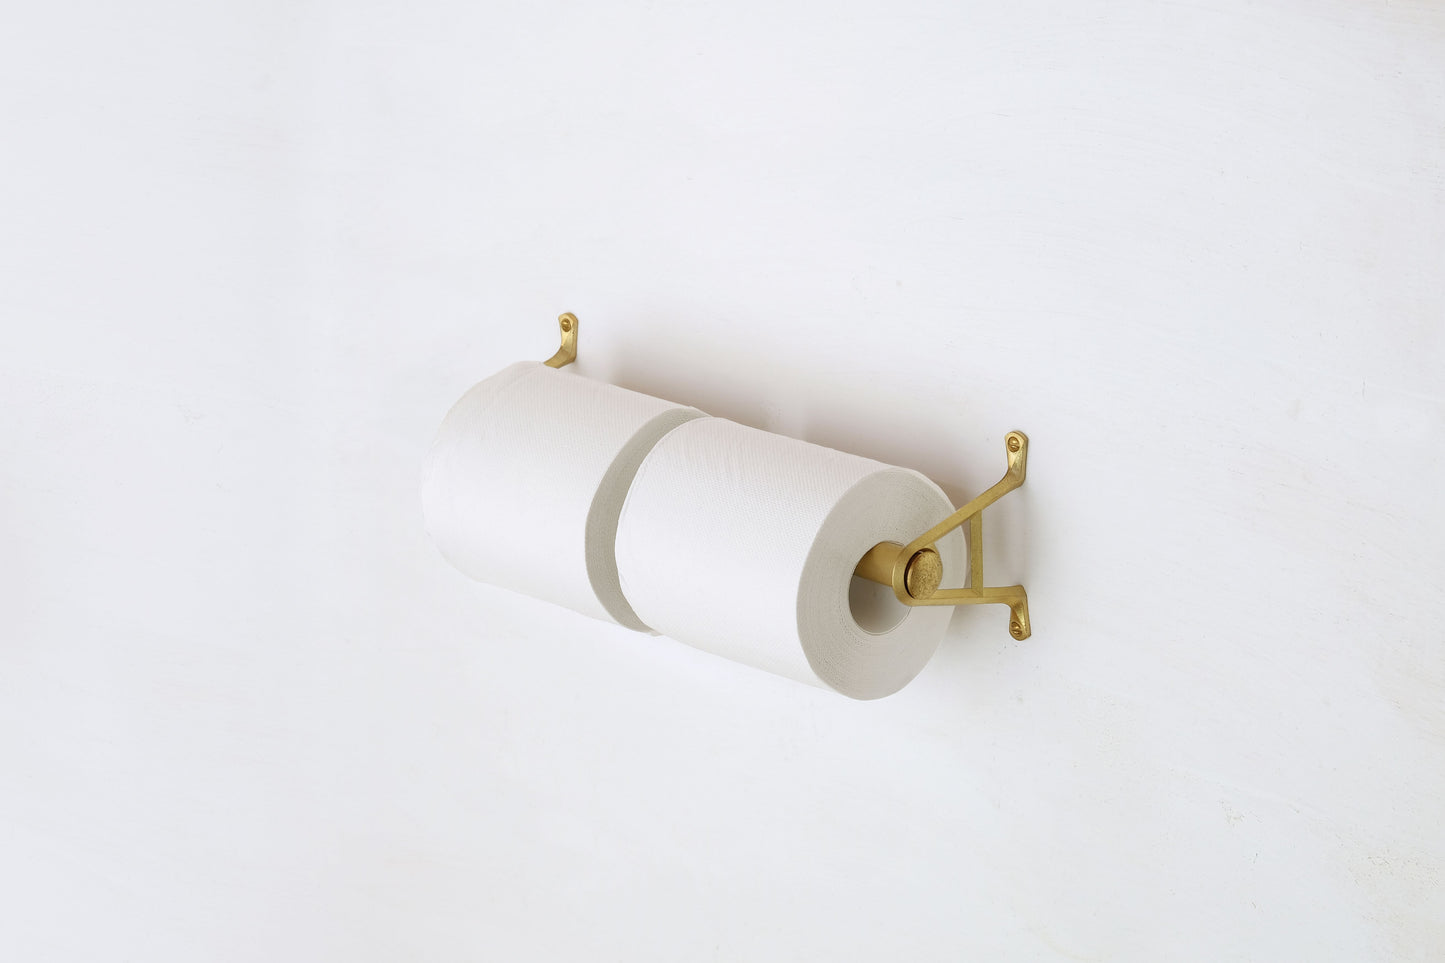 Pipe bracket for toilet paper